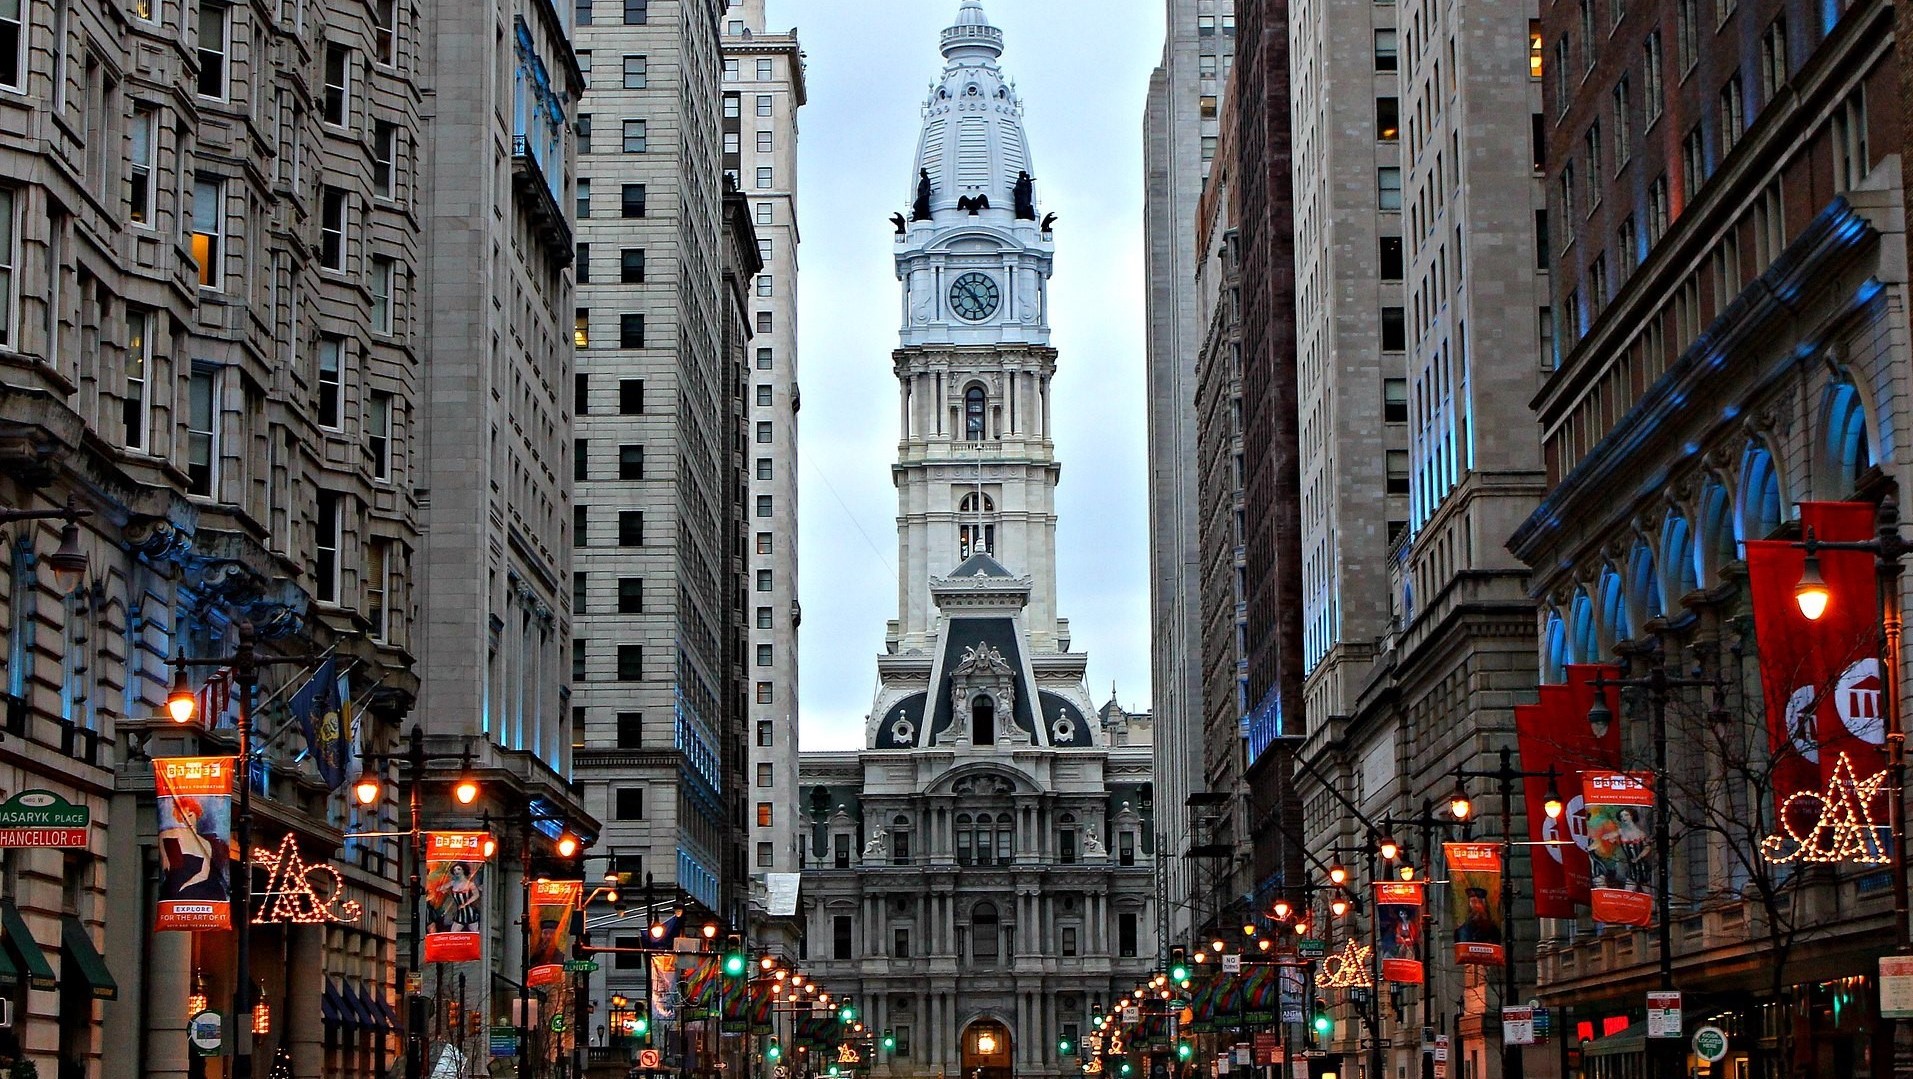 The Philadelphia City Immersion